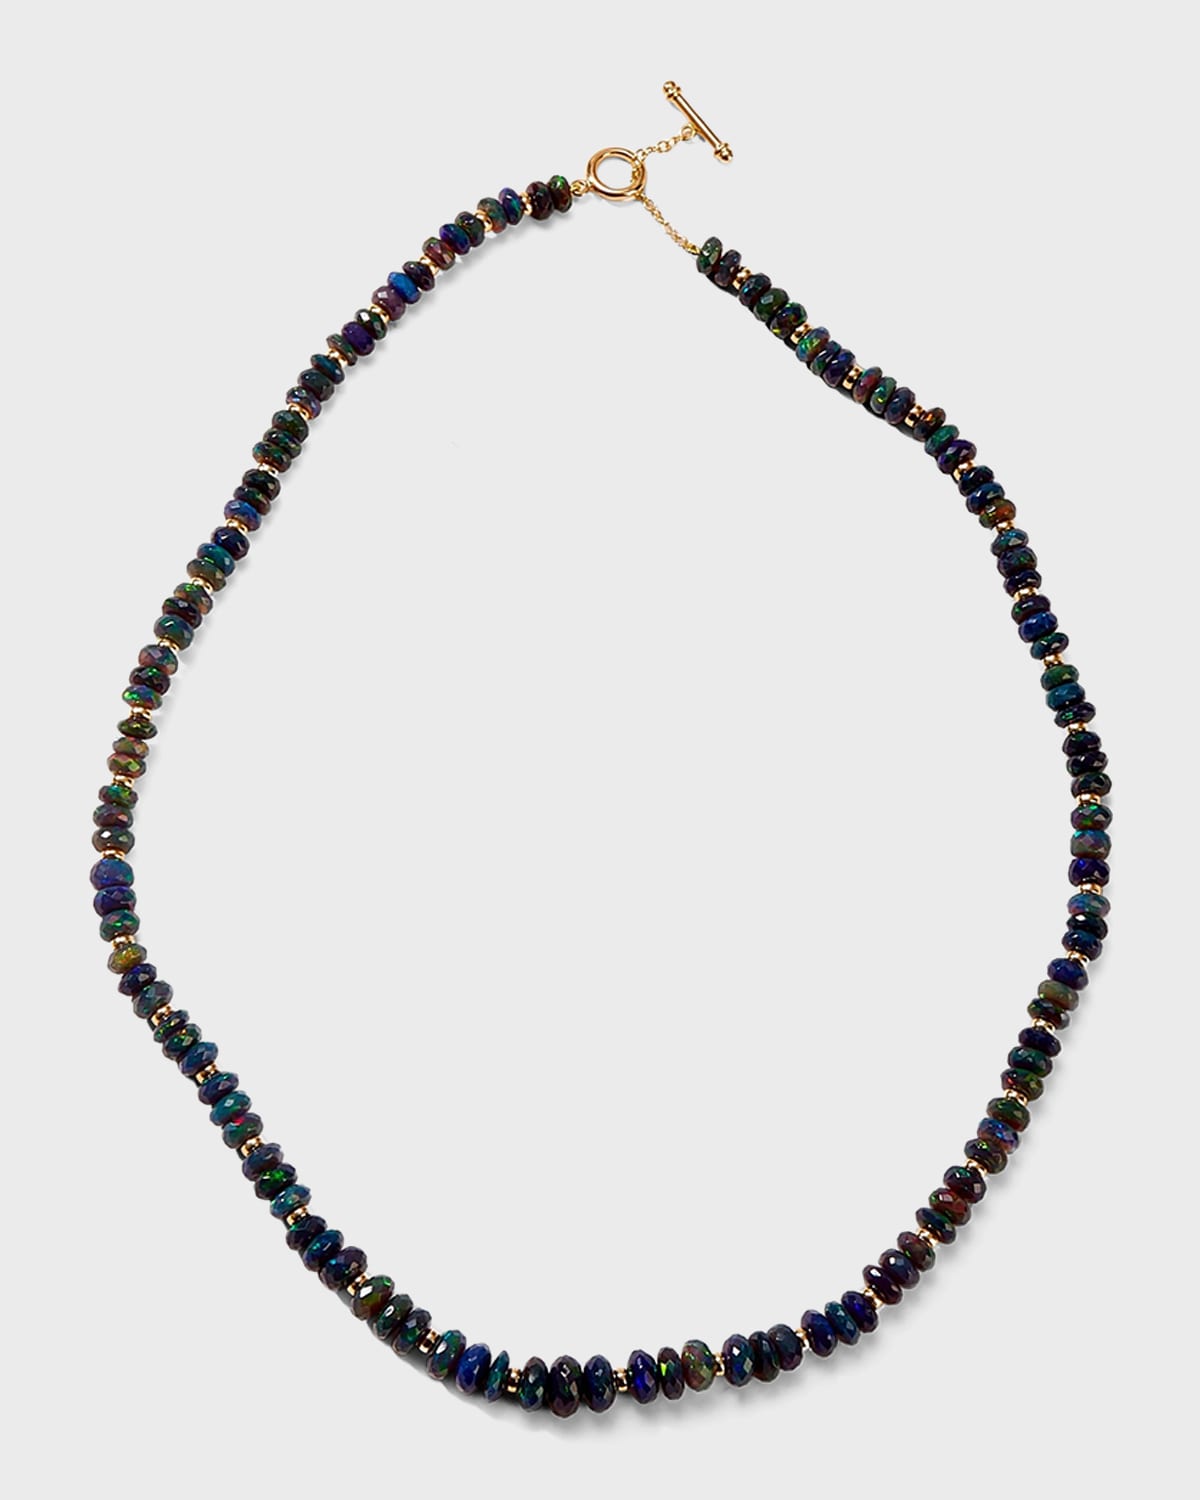 Circular Flower Black resin Pendant  multi strand bead cord necklace 